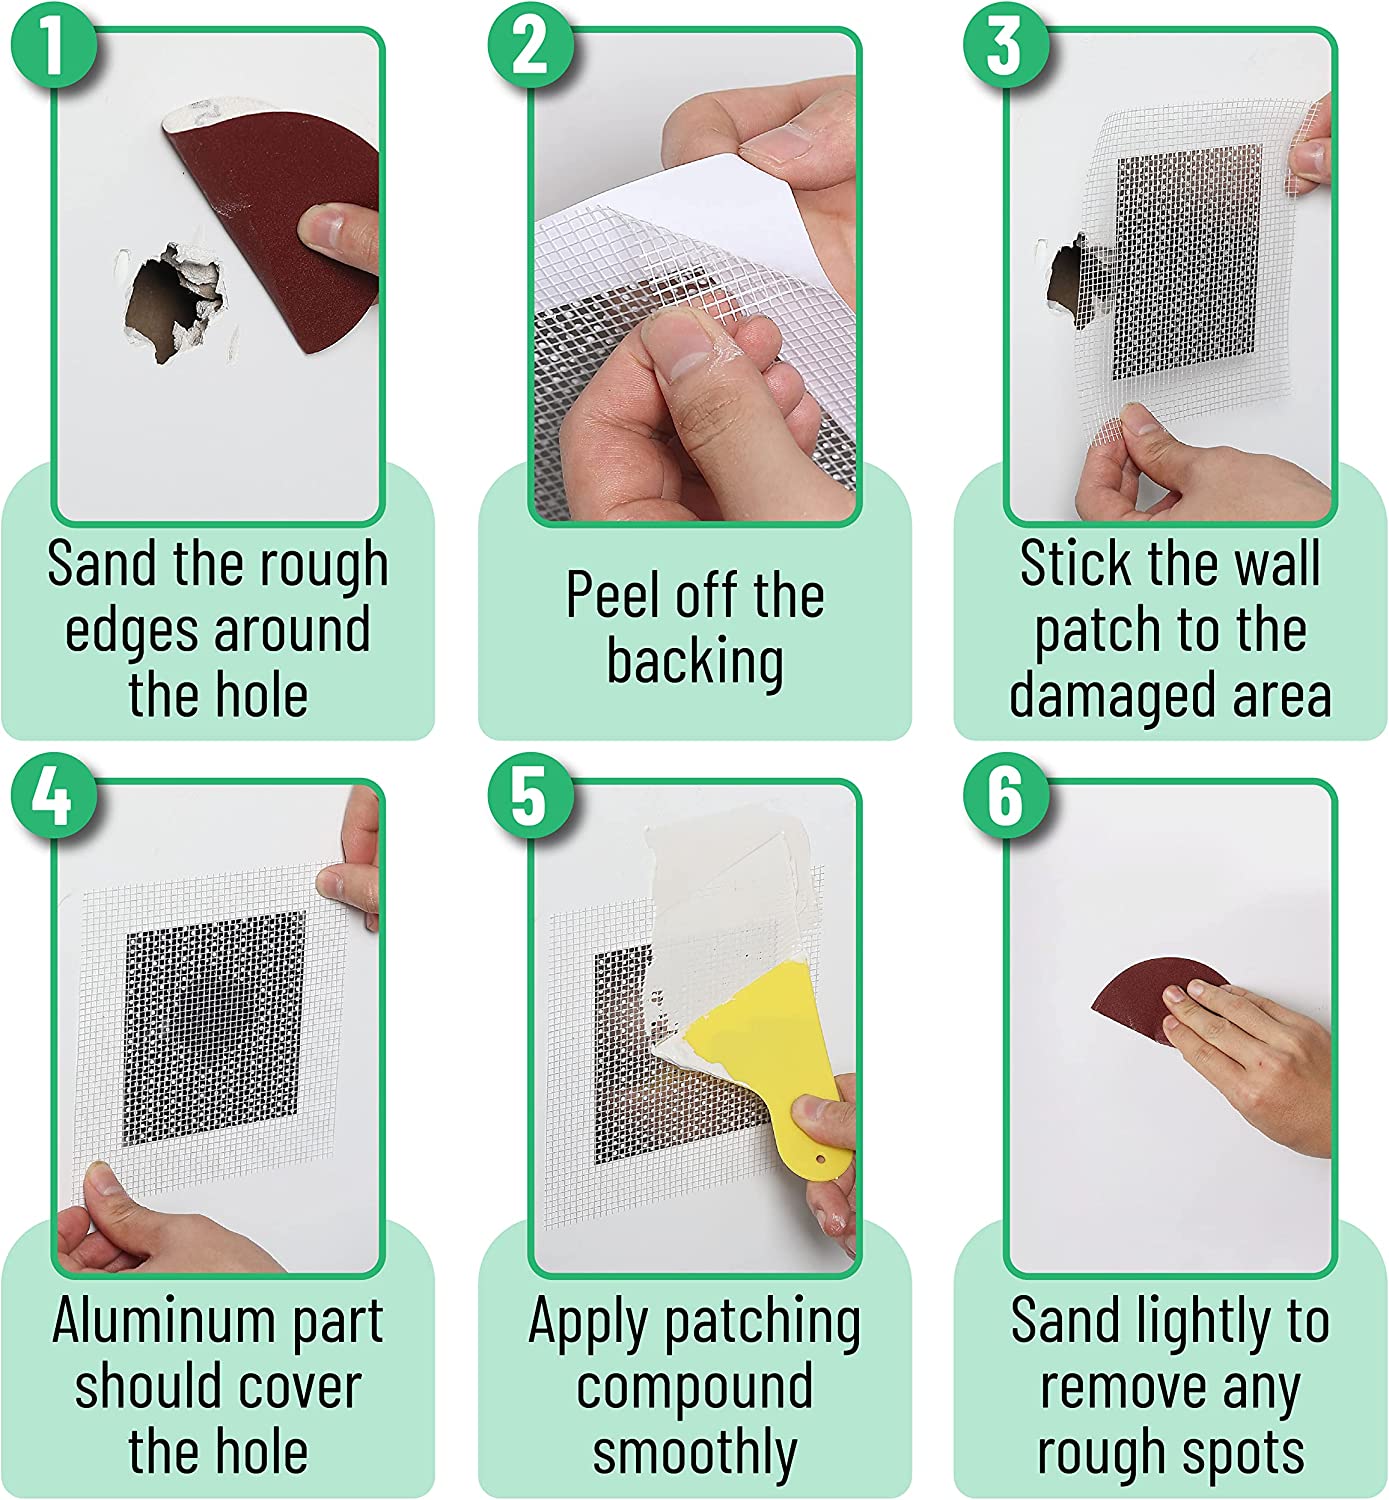 Wall Repair Patch Kit